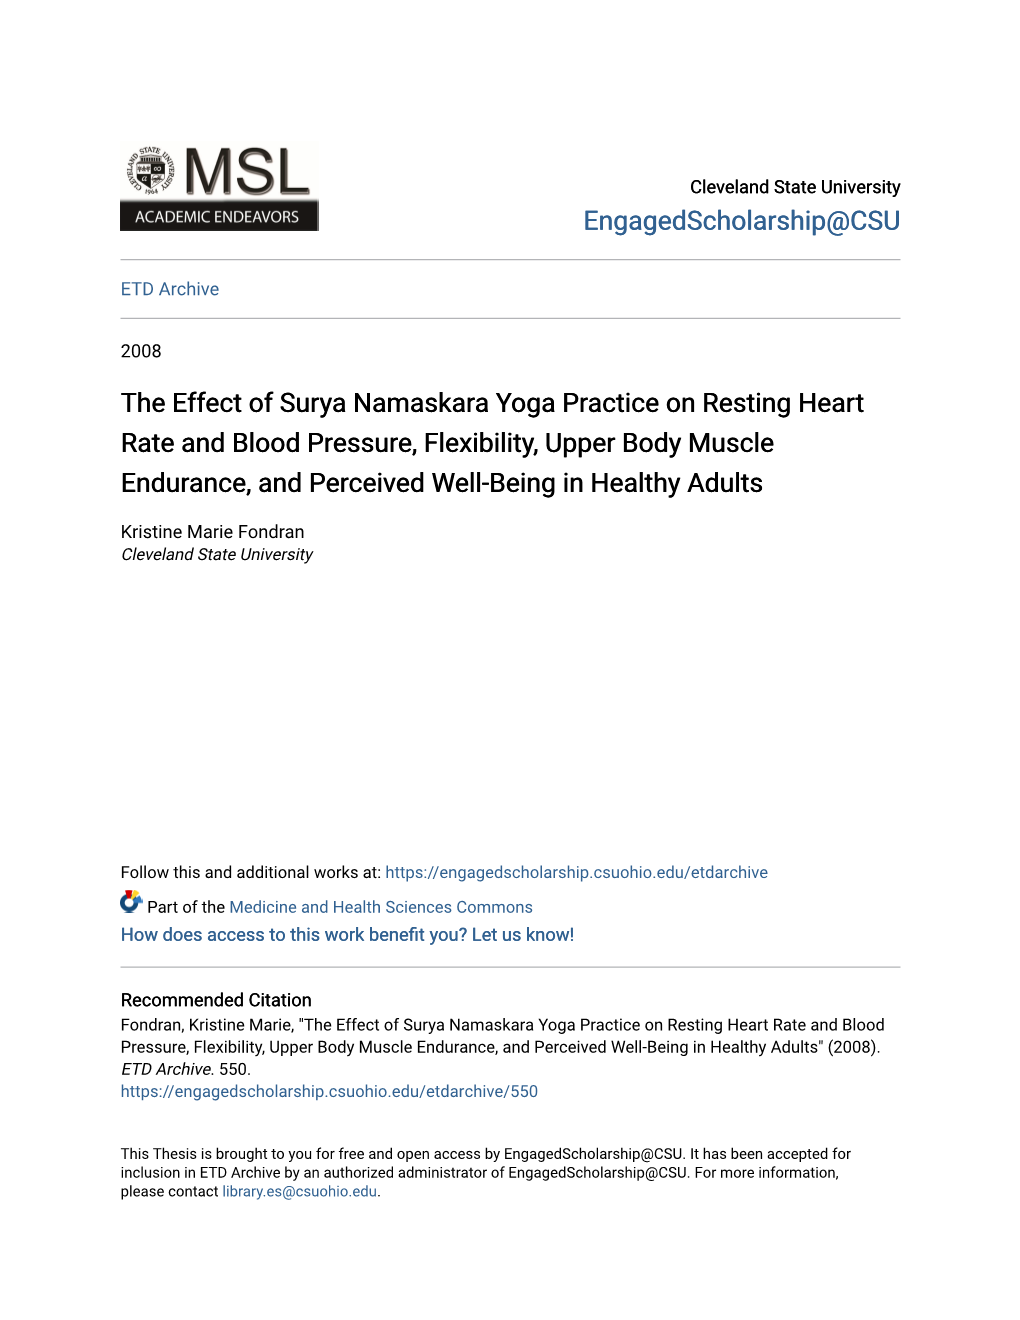 The Effect of Surya Namaskara Yoga